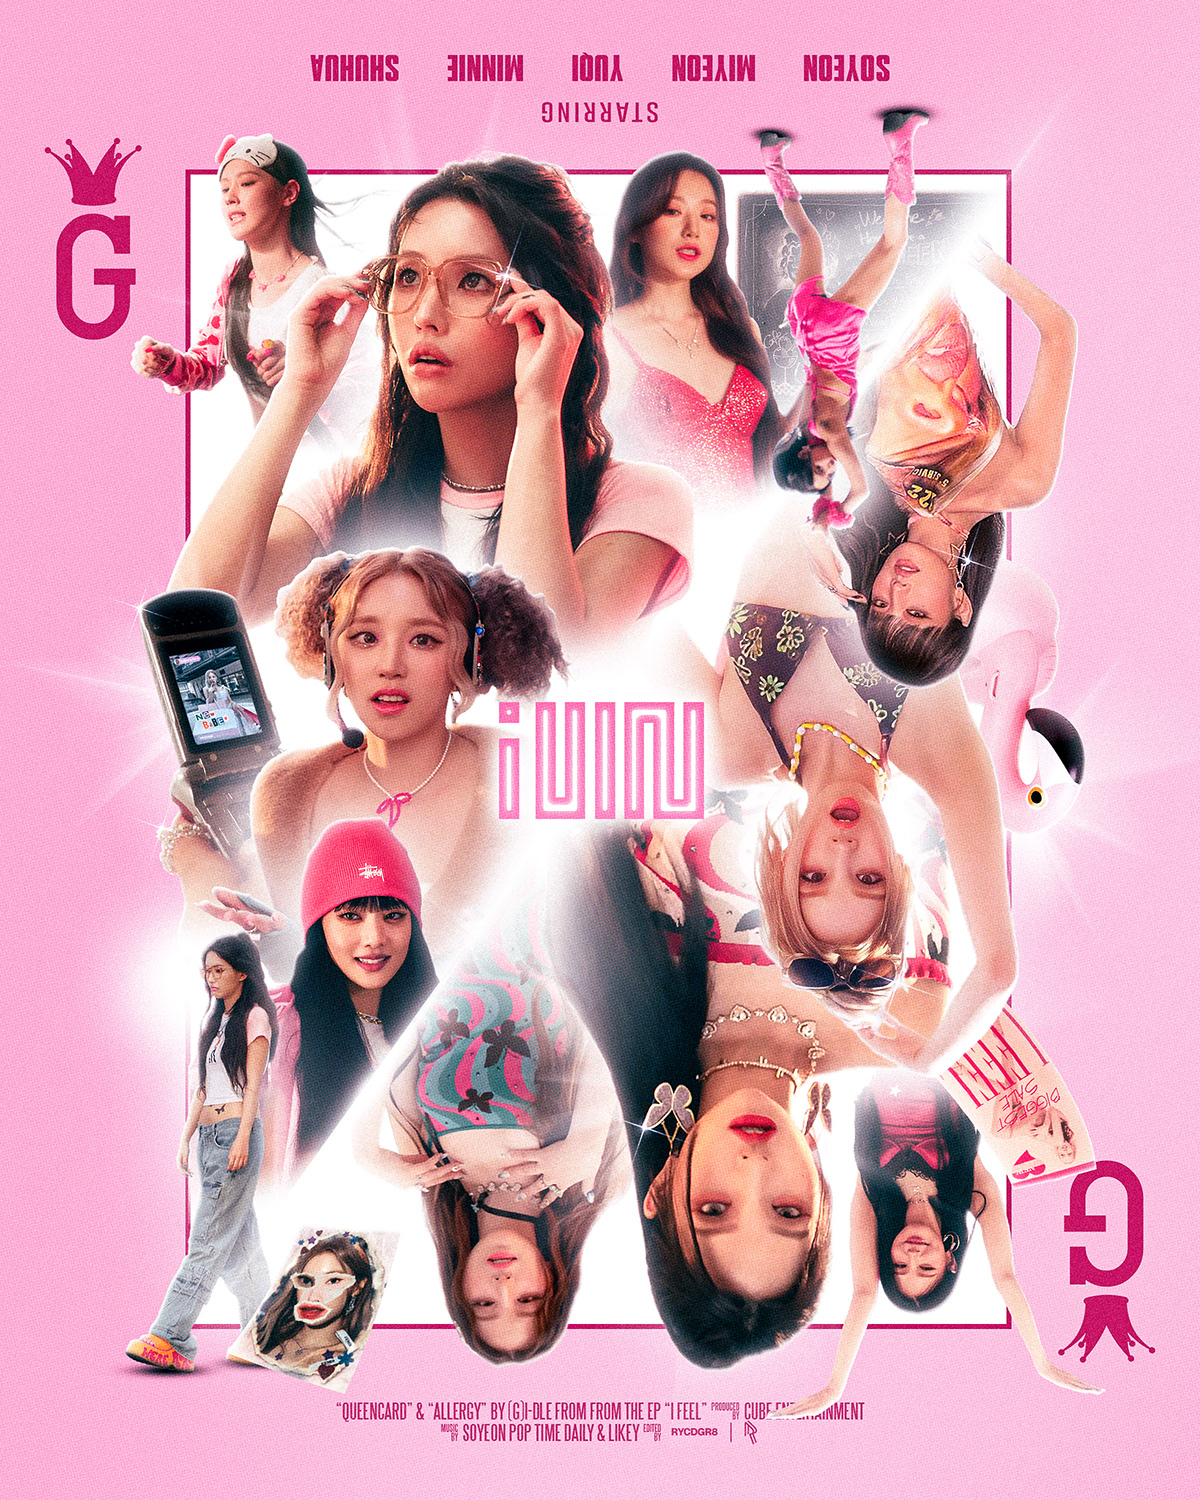 Gidle kpop Poster Design kpop poster kpop fanart album art album cover